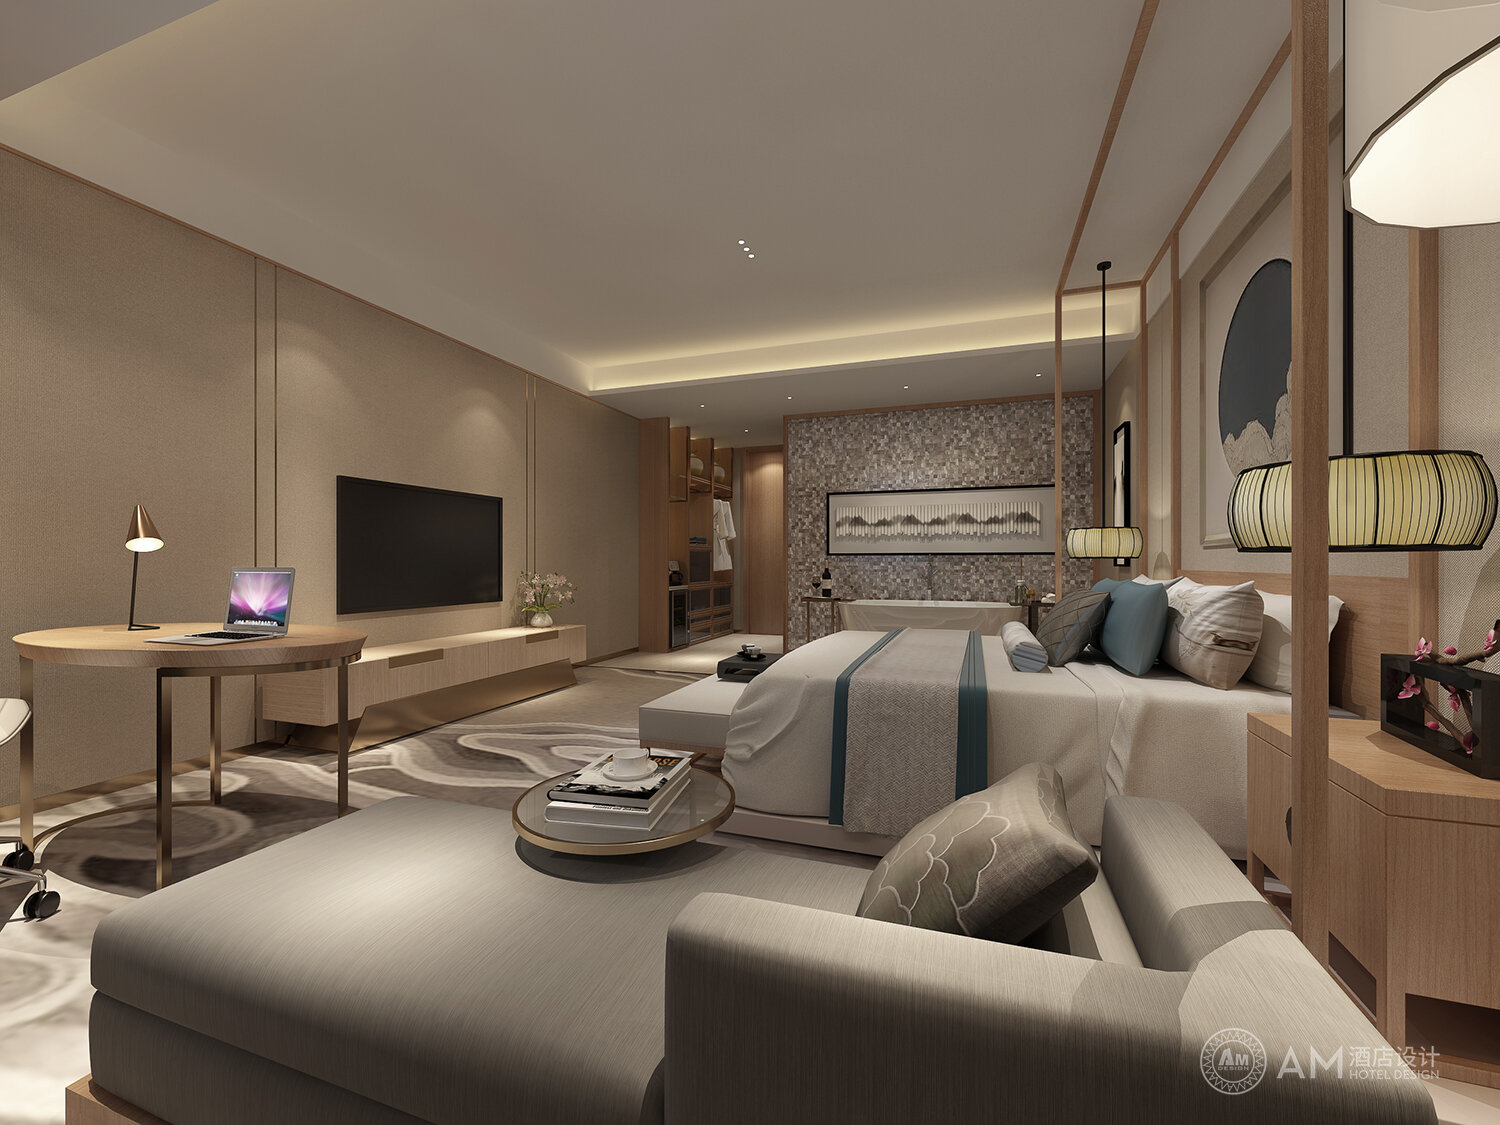 AM DESIGN | Room design of wandun hotel in Daqing